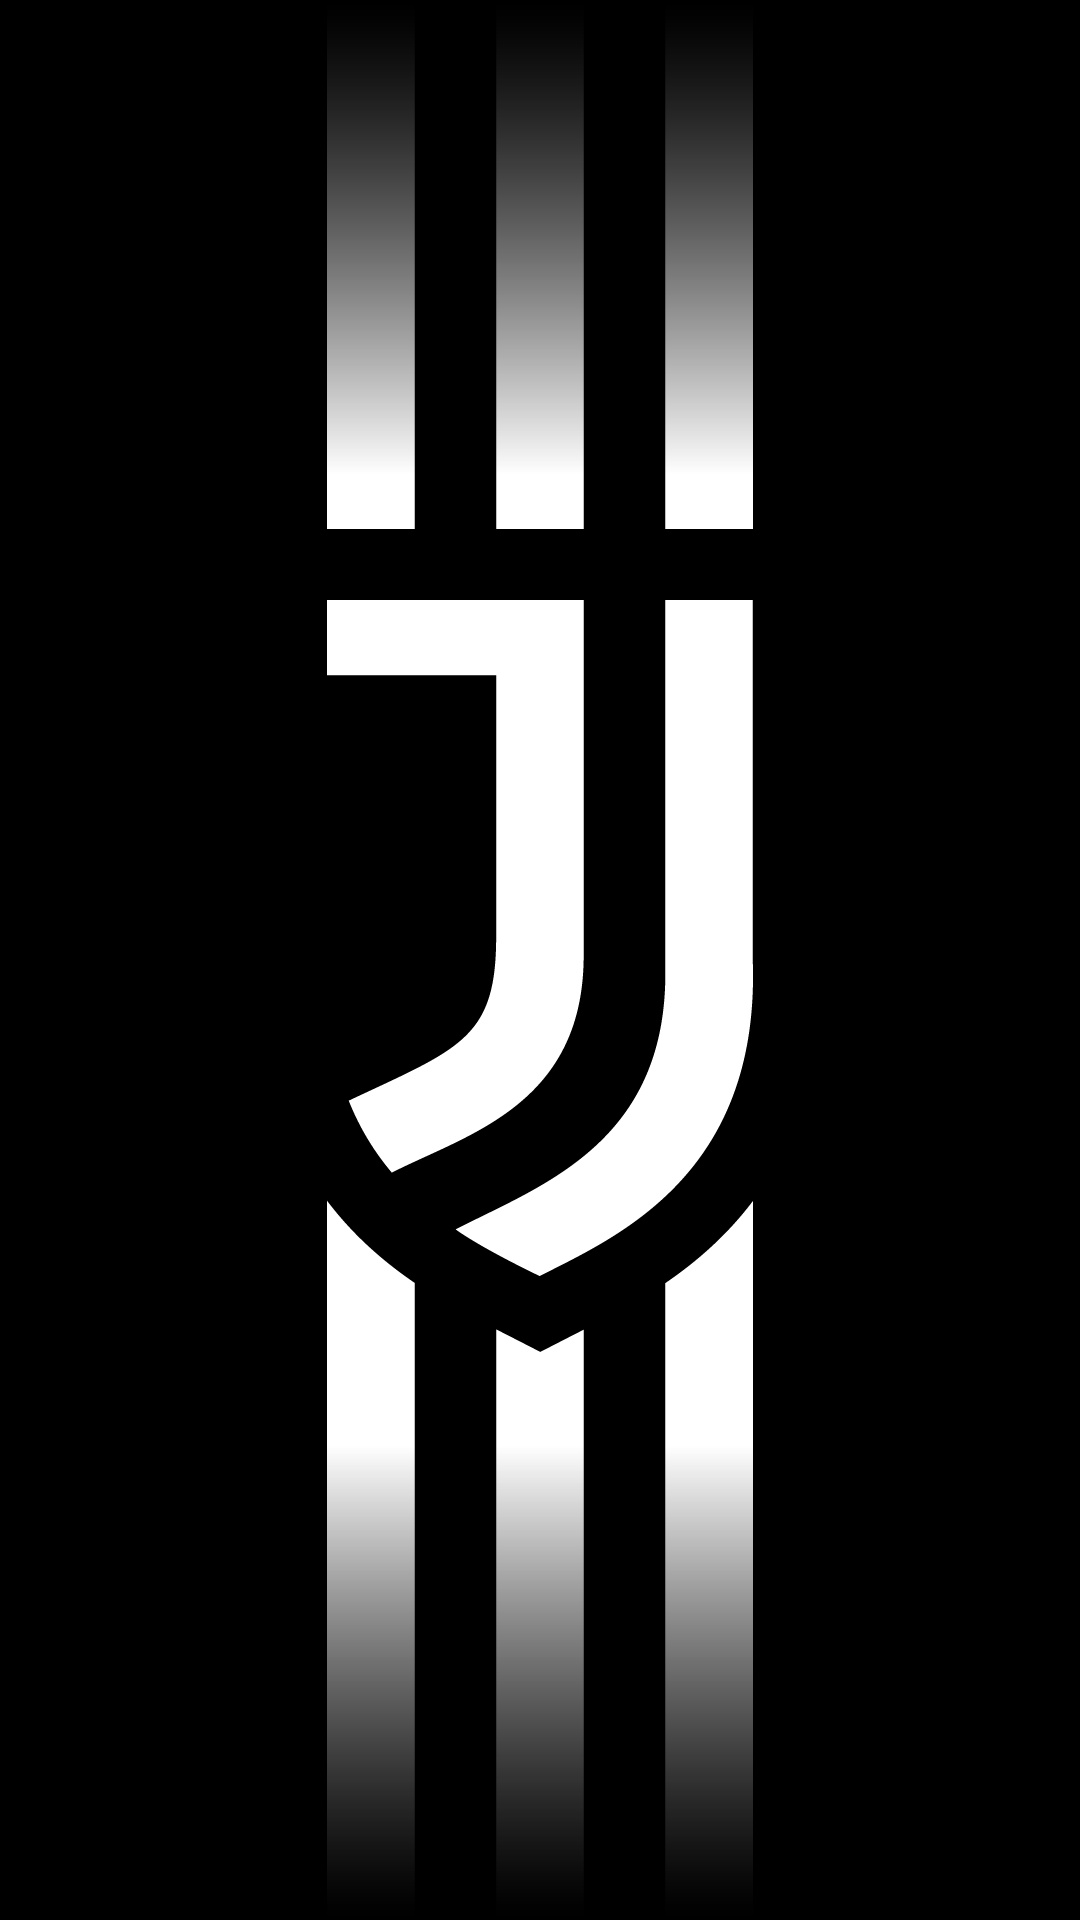 Juventus logo wallpapers, 4K HD, 1080x1920 Full HD Handy